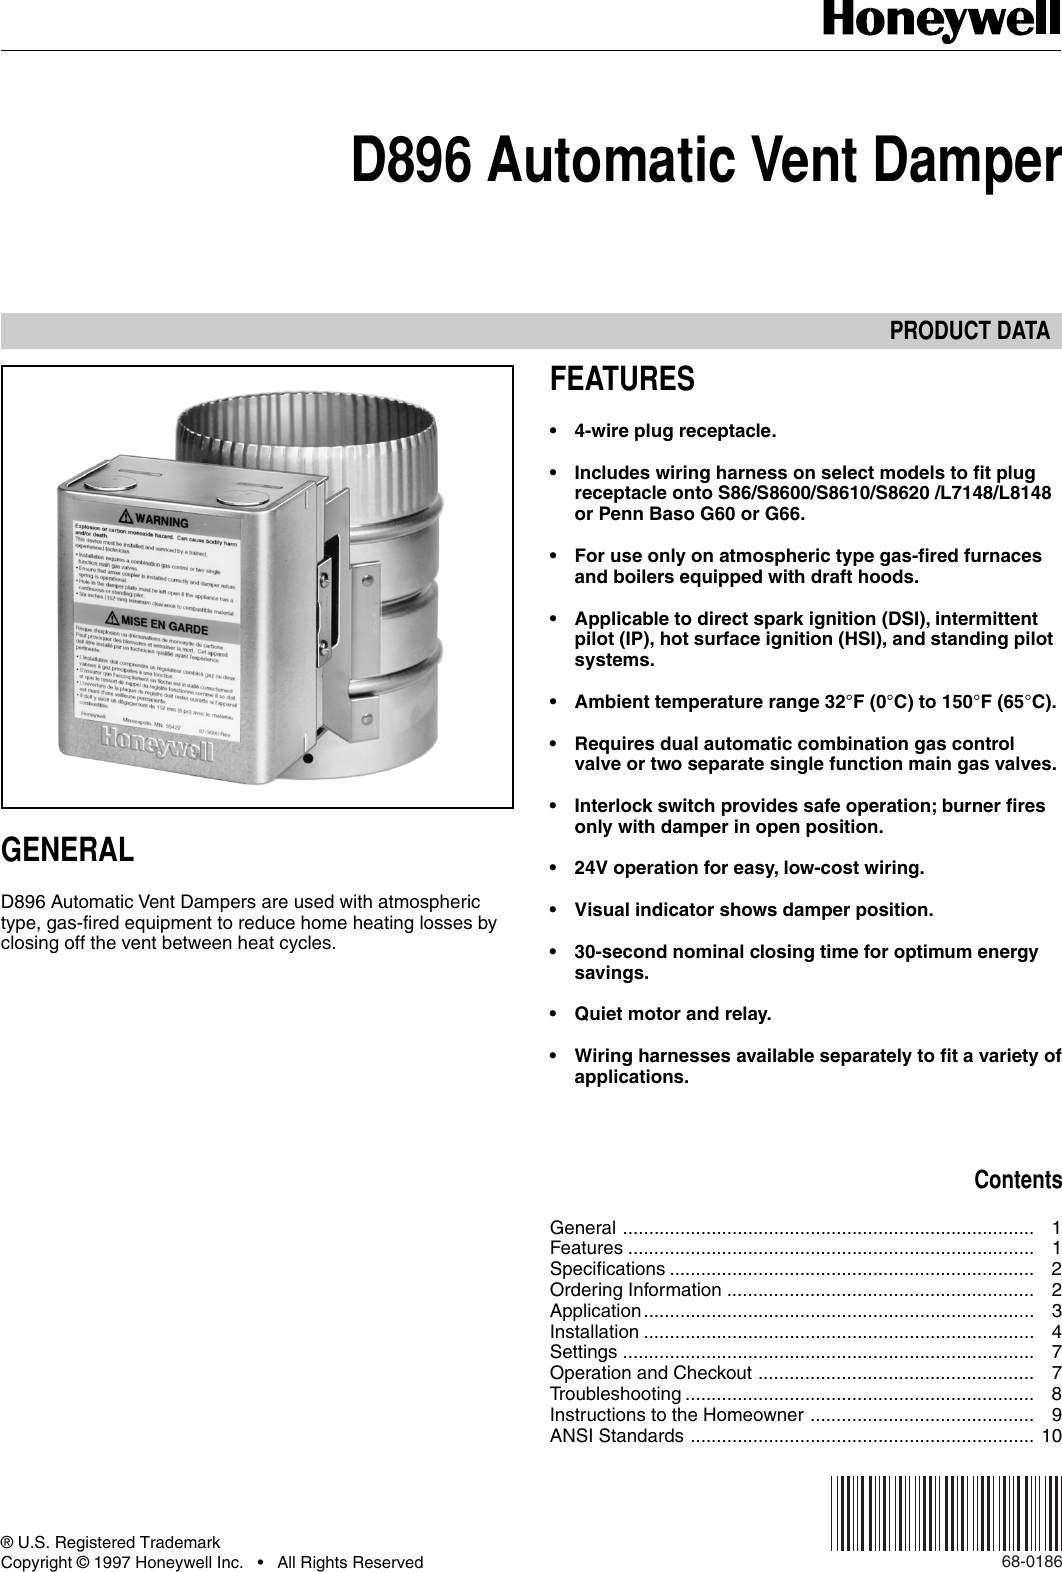 Page 1 of 12 - Honeywell Honeywell-Automatic-Vent-Damper-D896-Users-Manual- 68-0186 - D896 Automatic Vent Damper  Honeywell-automatic-vent-damper-d896-users-manual